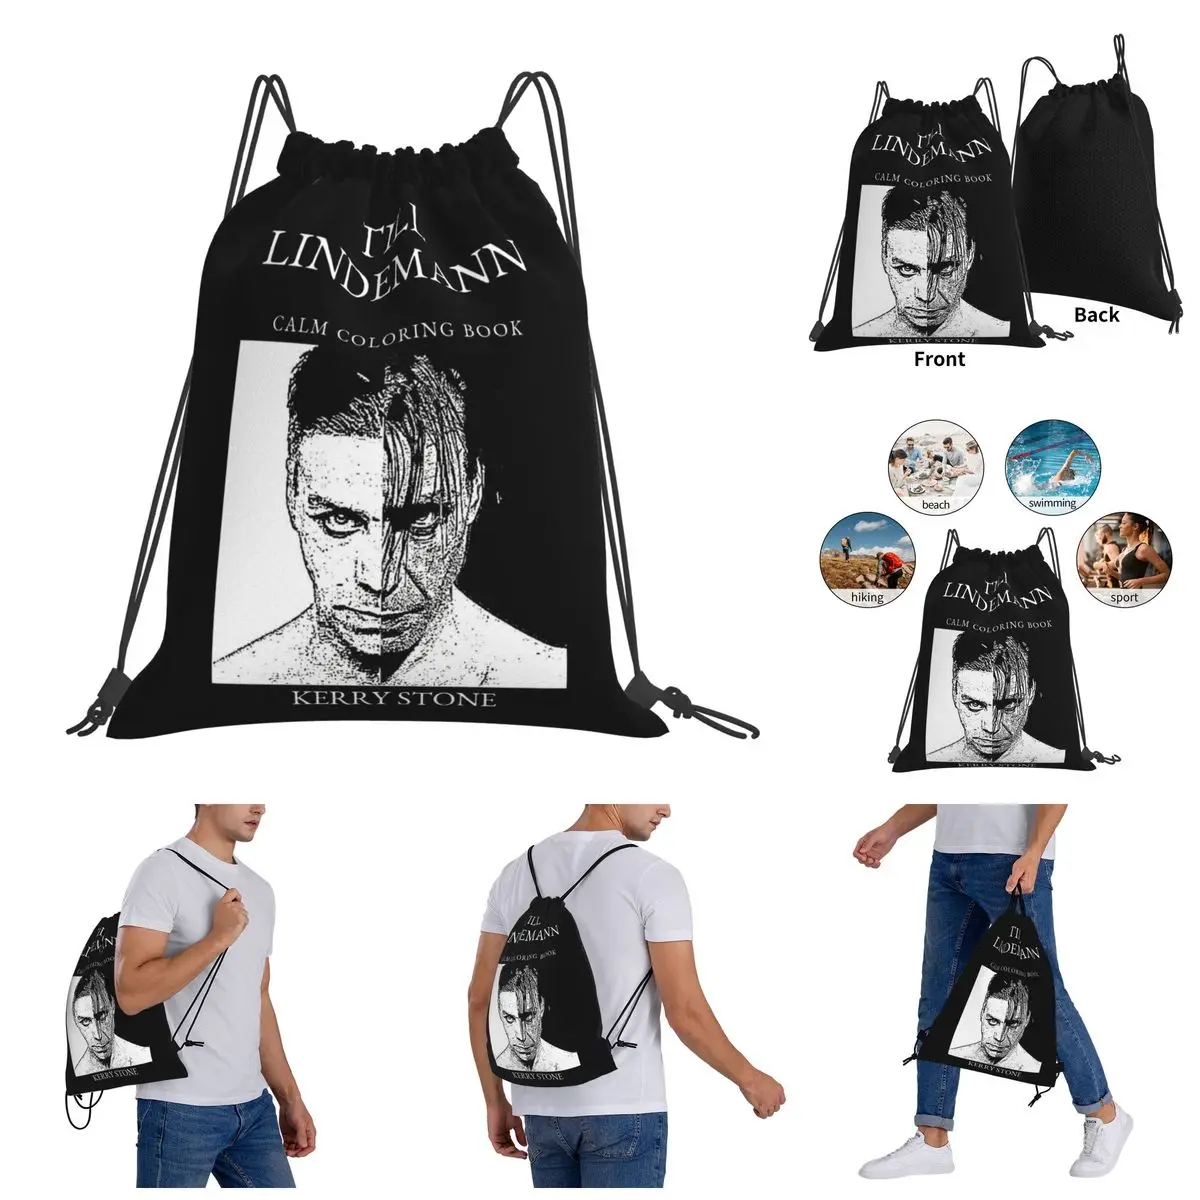 

Backpack Humor Graphic Drawstring Bags Gym Bag Till And Lindemann Calm Coloring Book_37765937 premium Rucksack